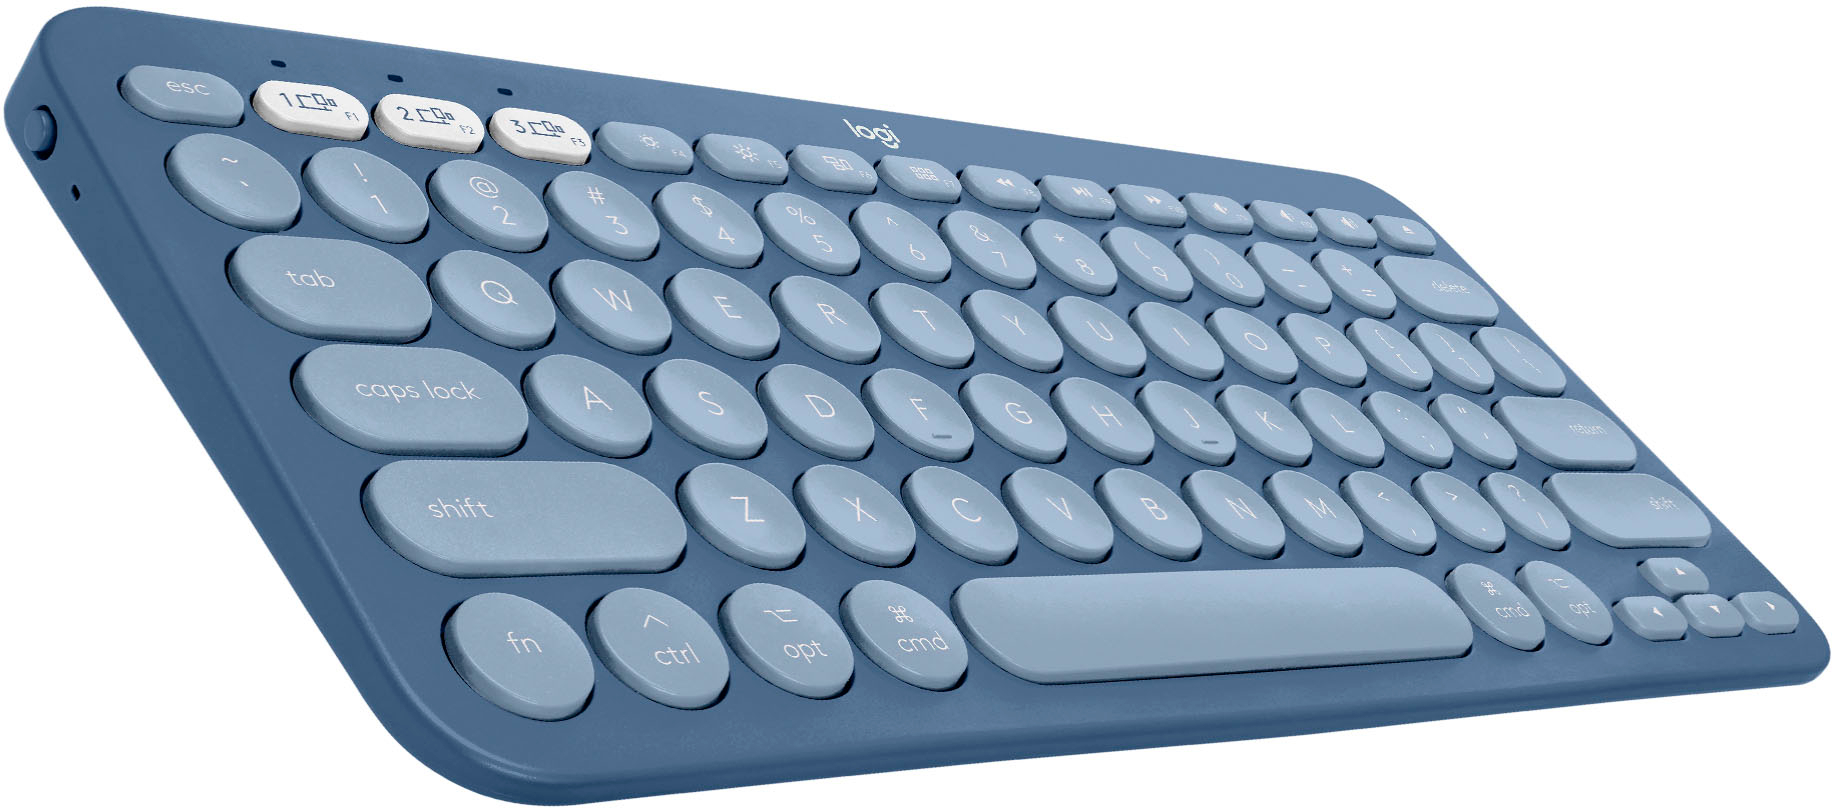 Pairing Logitech Bluetooth Keyboards: A Guide插图